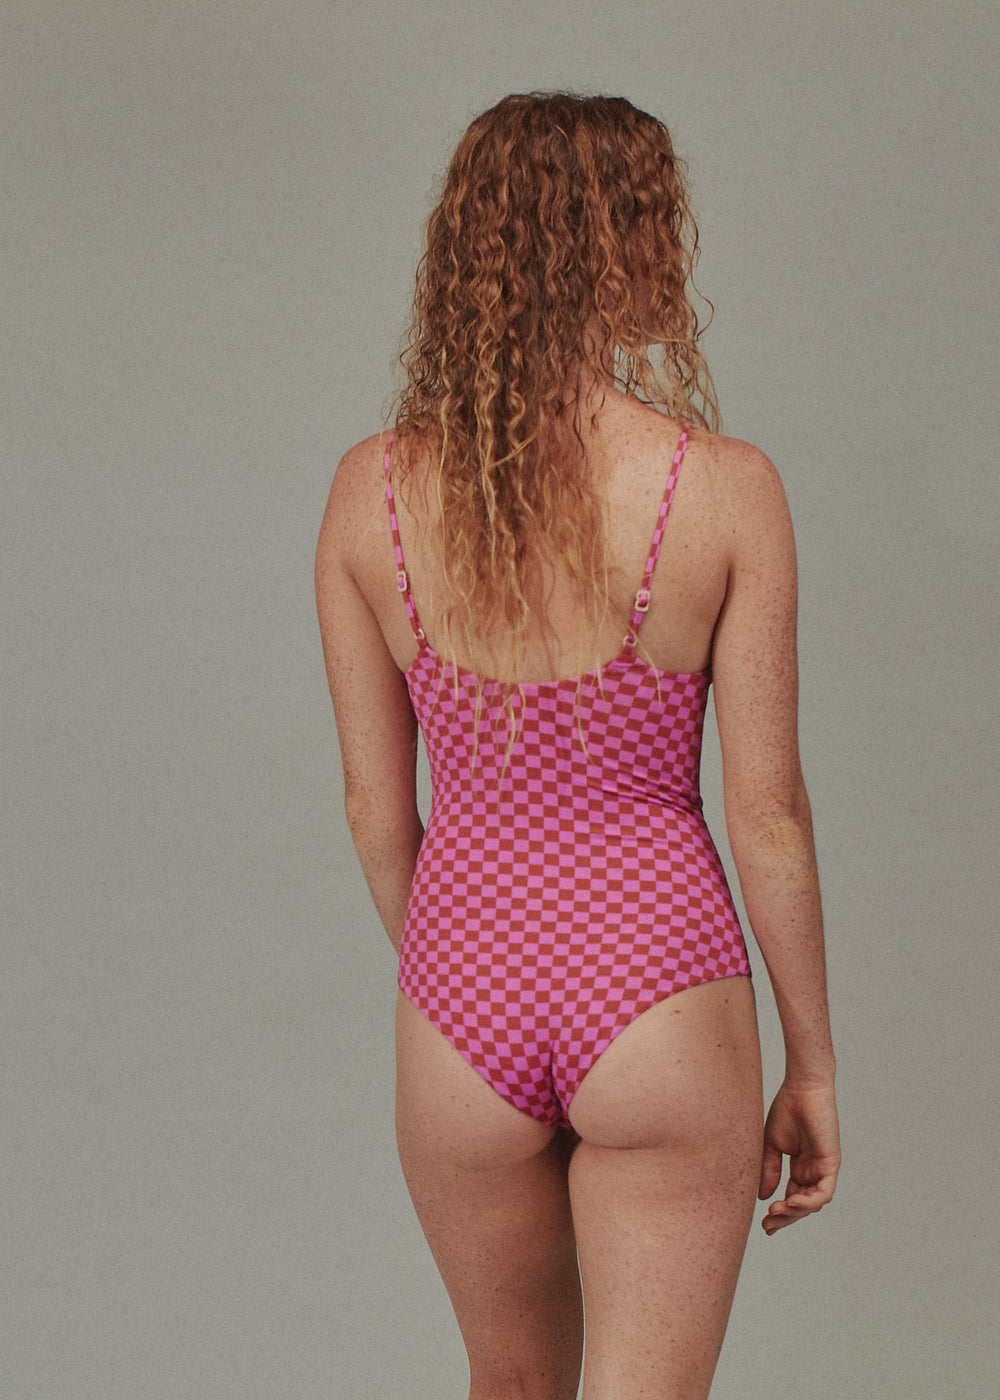 Acacia Swimwear Stella Lining One Piece |Maud|